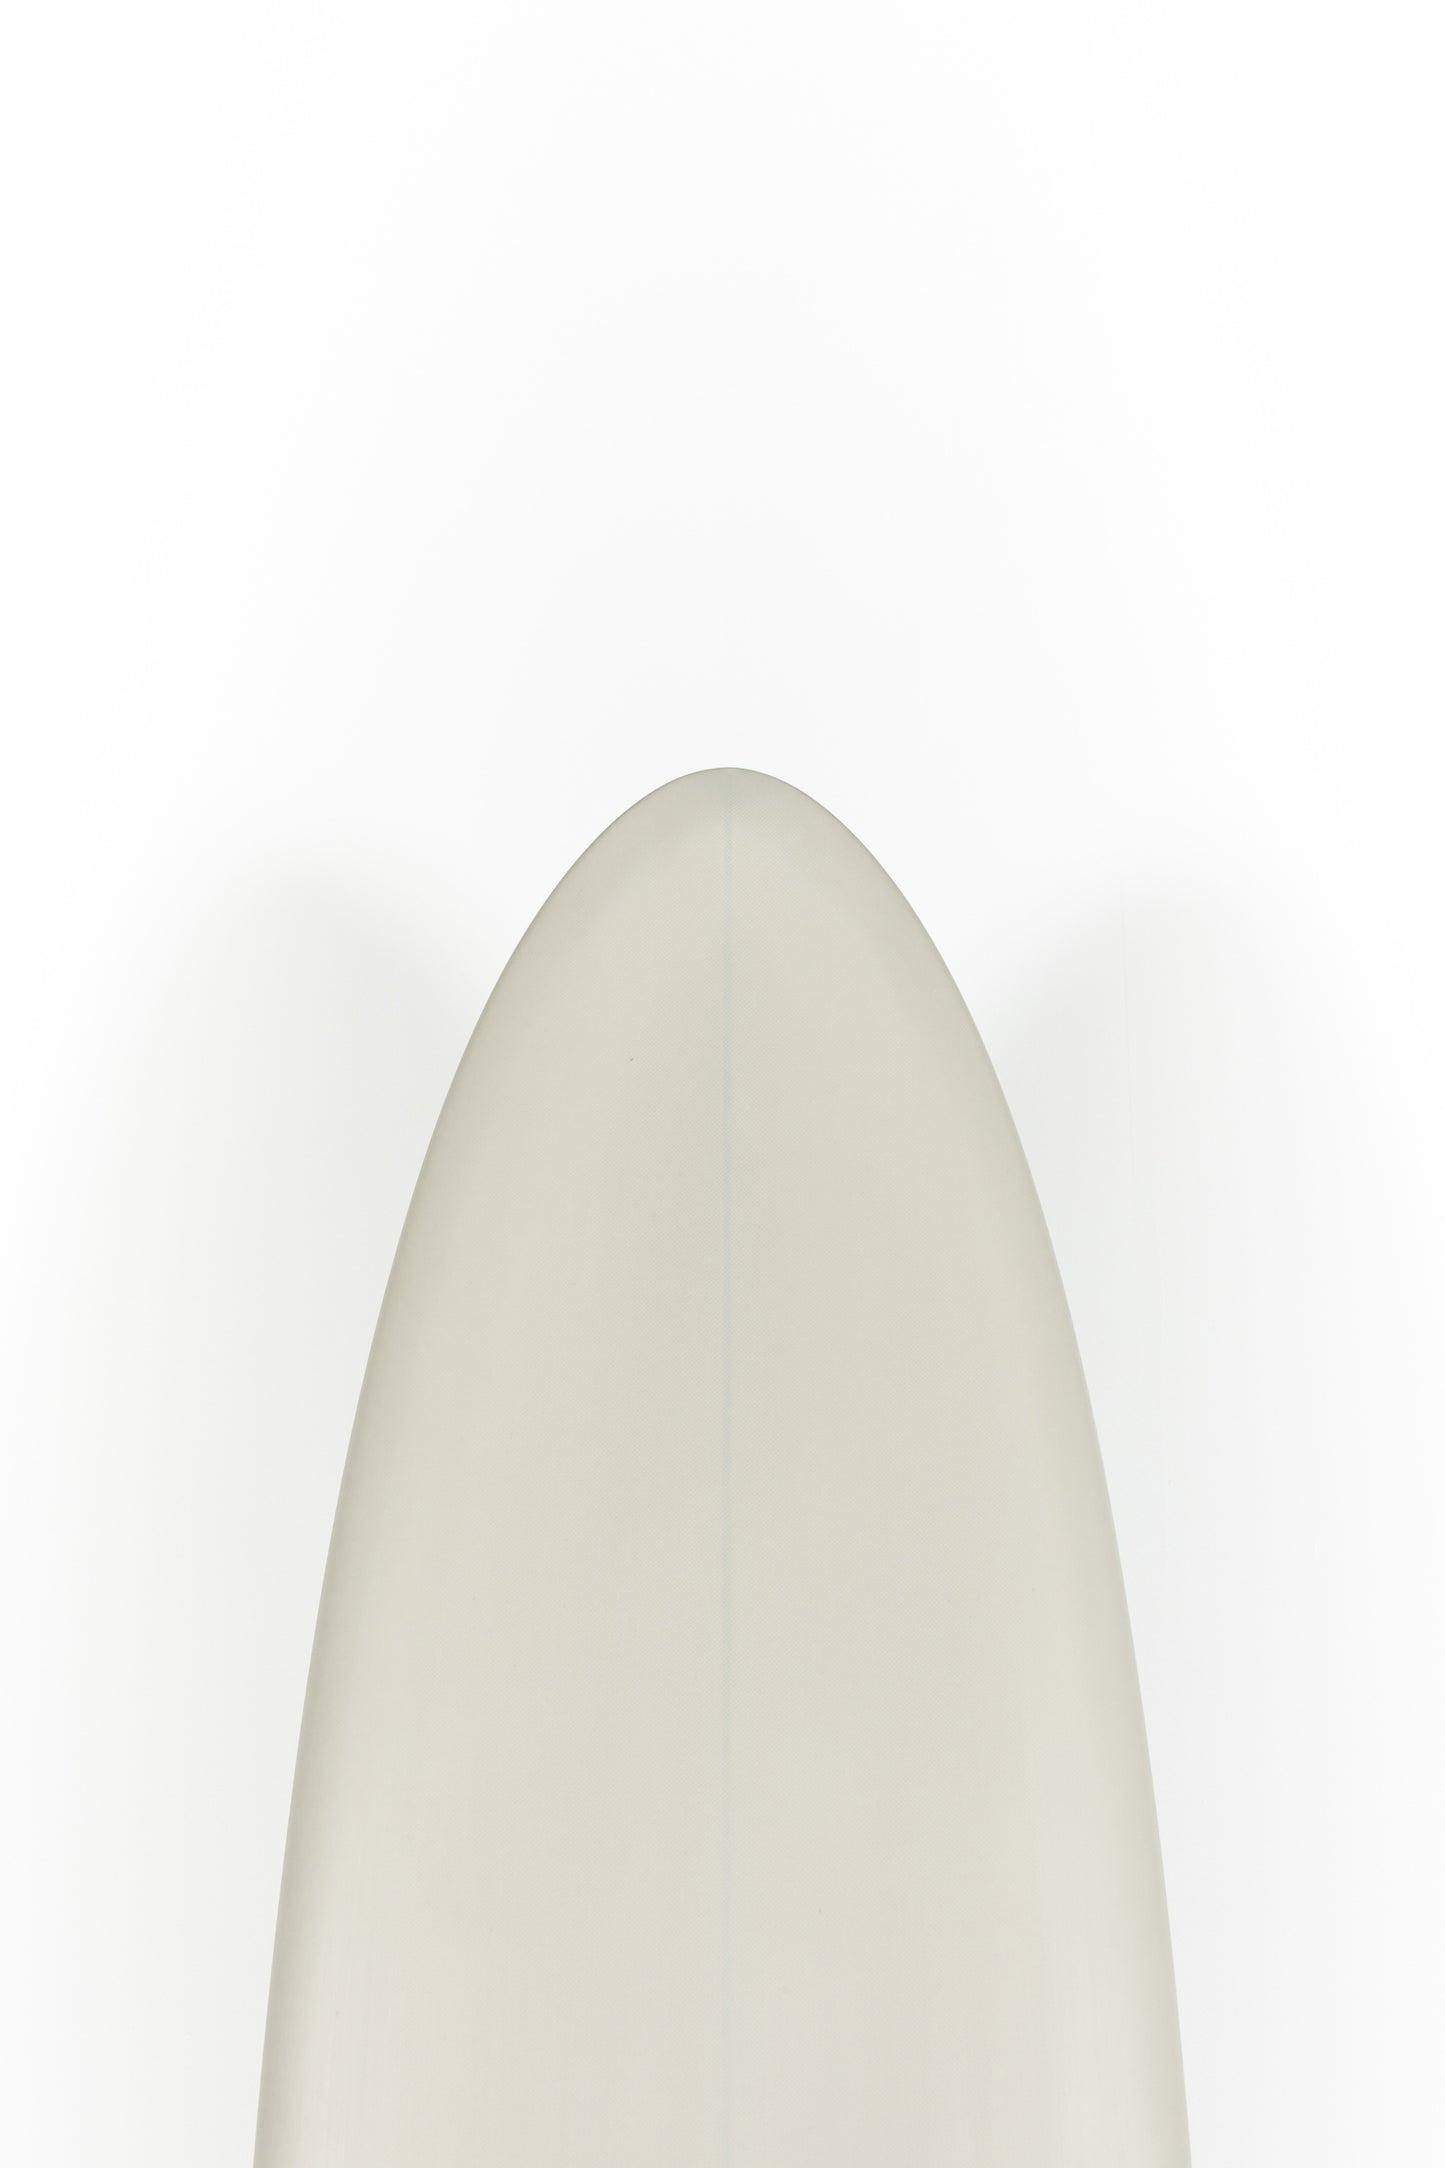 
                  
                    Pukas Surf Shop_Joshua Keogh Surfboard - LIBERATOR SINGLE by Joshua Keogh - 7'4" x 21 3/4 x 2 5/8 - LIBERATOR74
                  
                